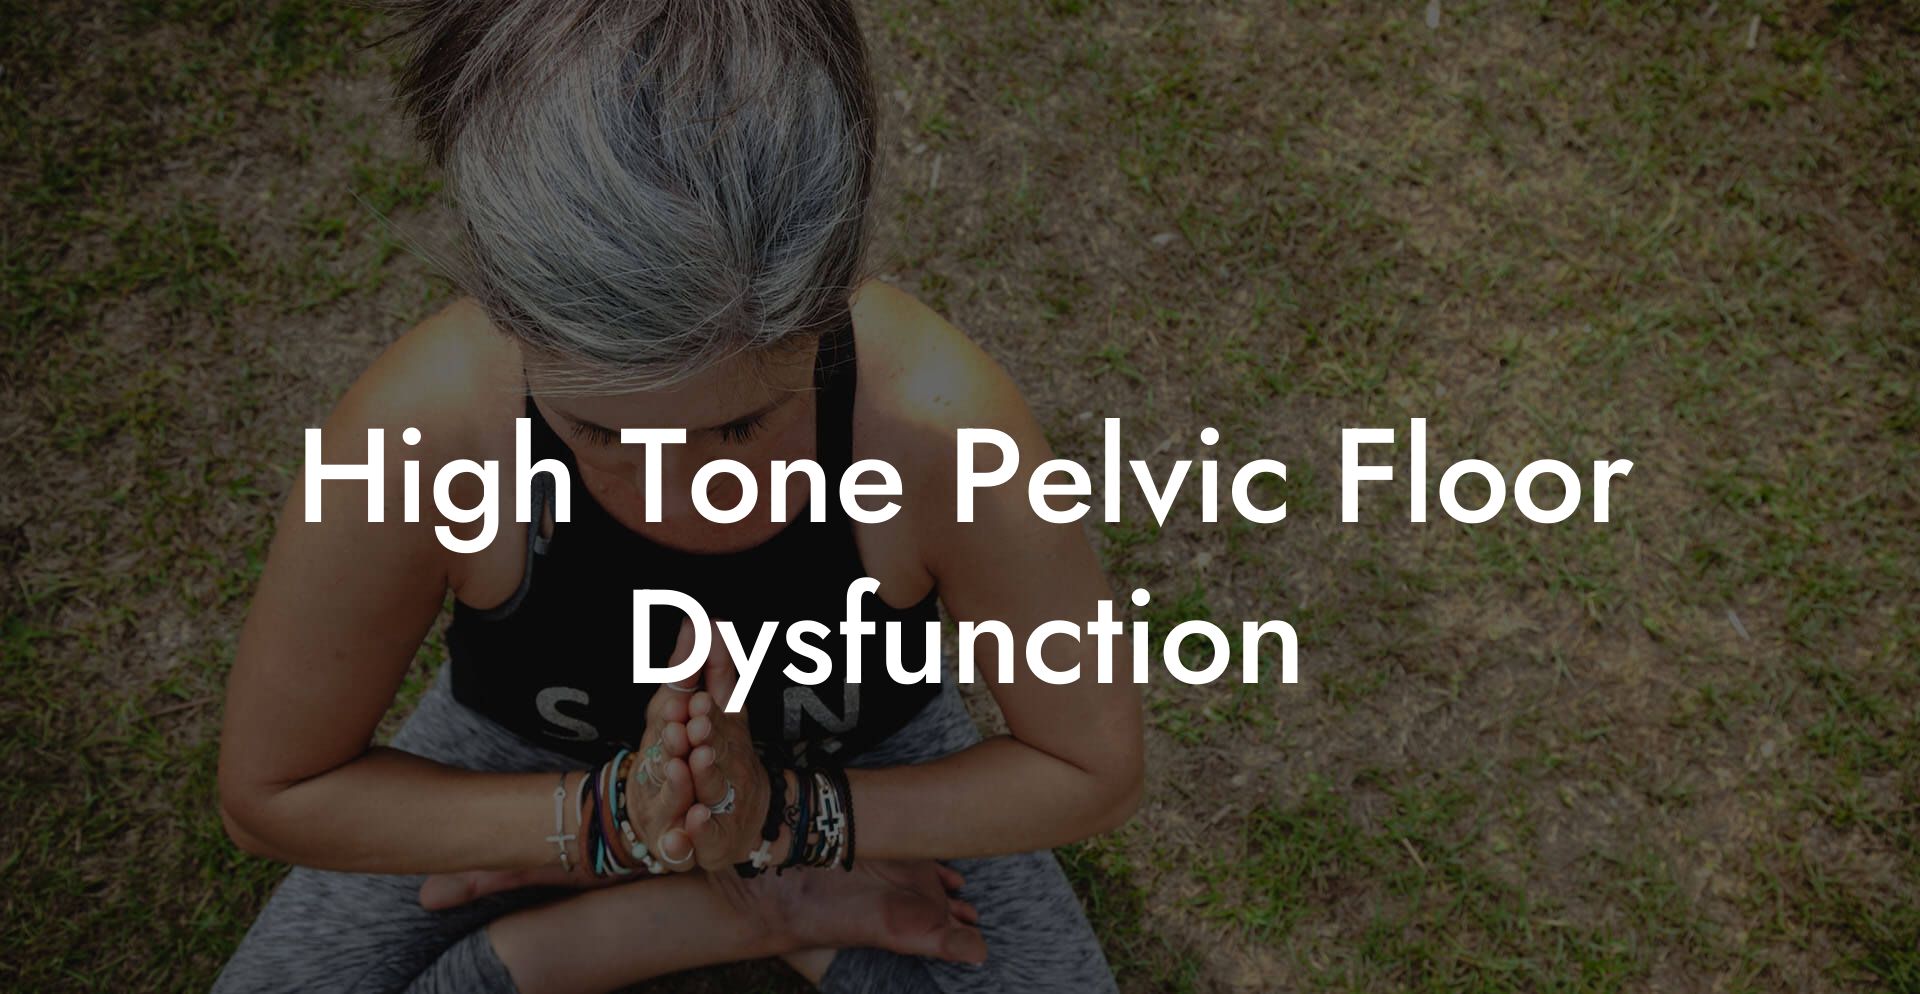 High Tone Pelvic Floor Dysfunction